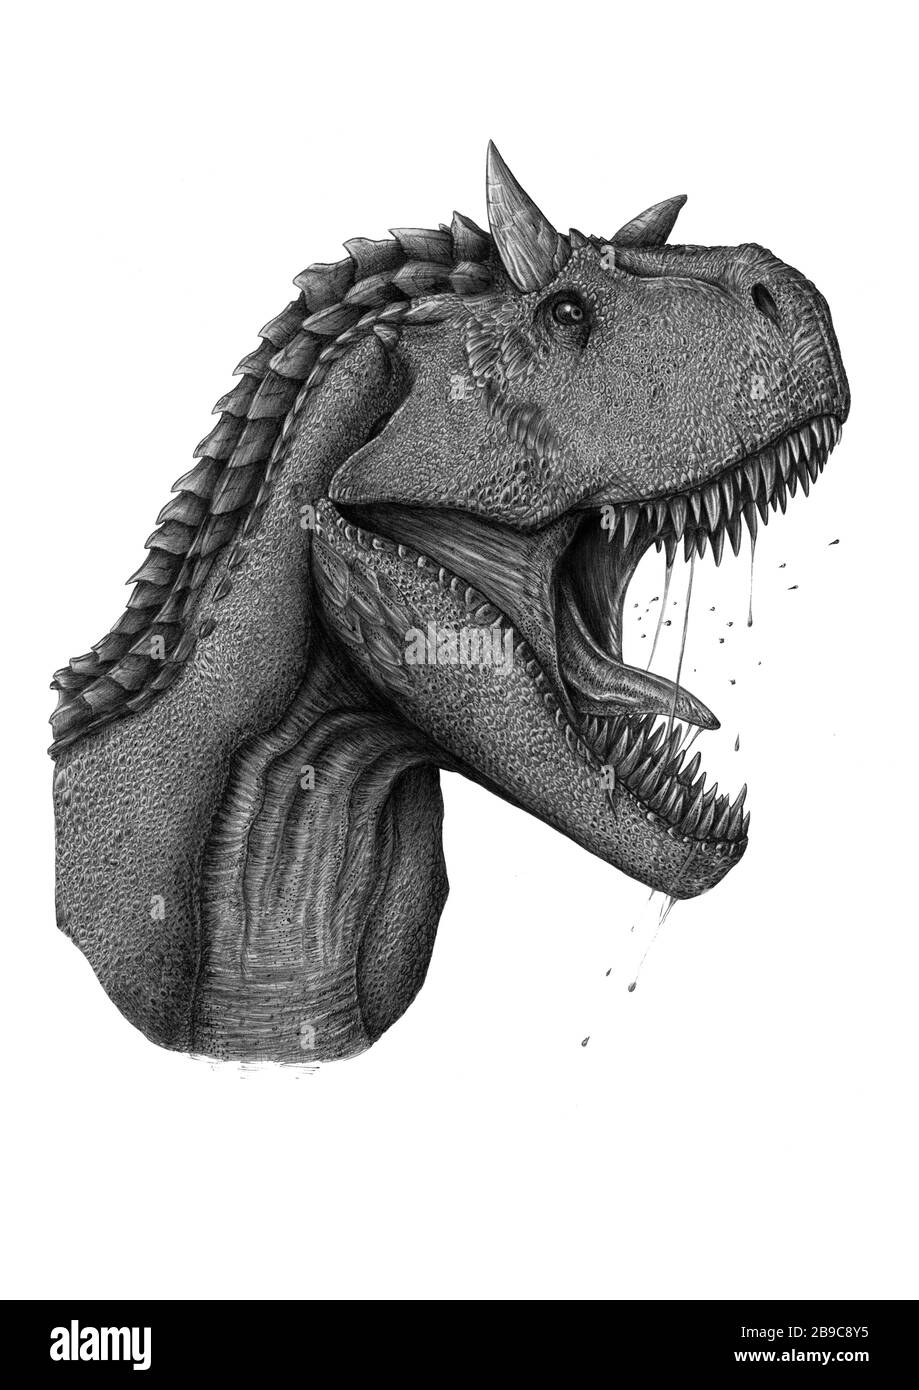 Carnotaurus dinosaur portrait on white background. Stock Photo